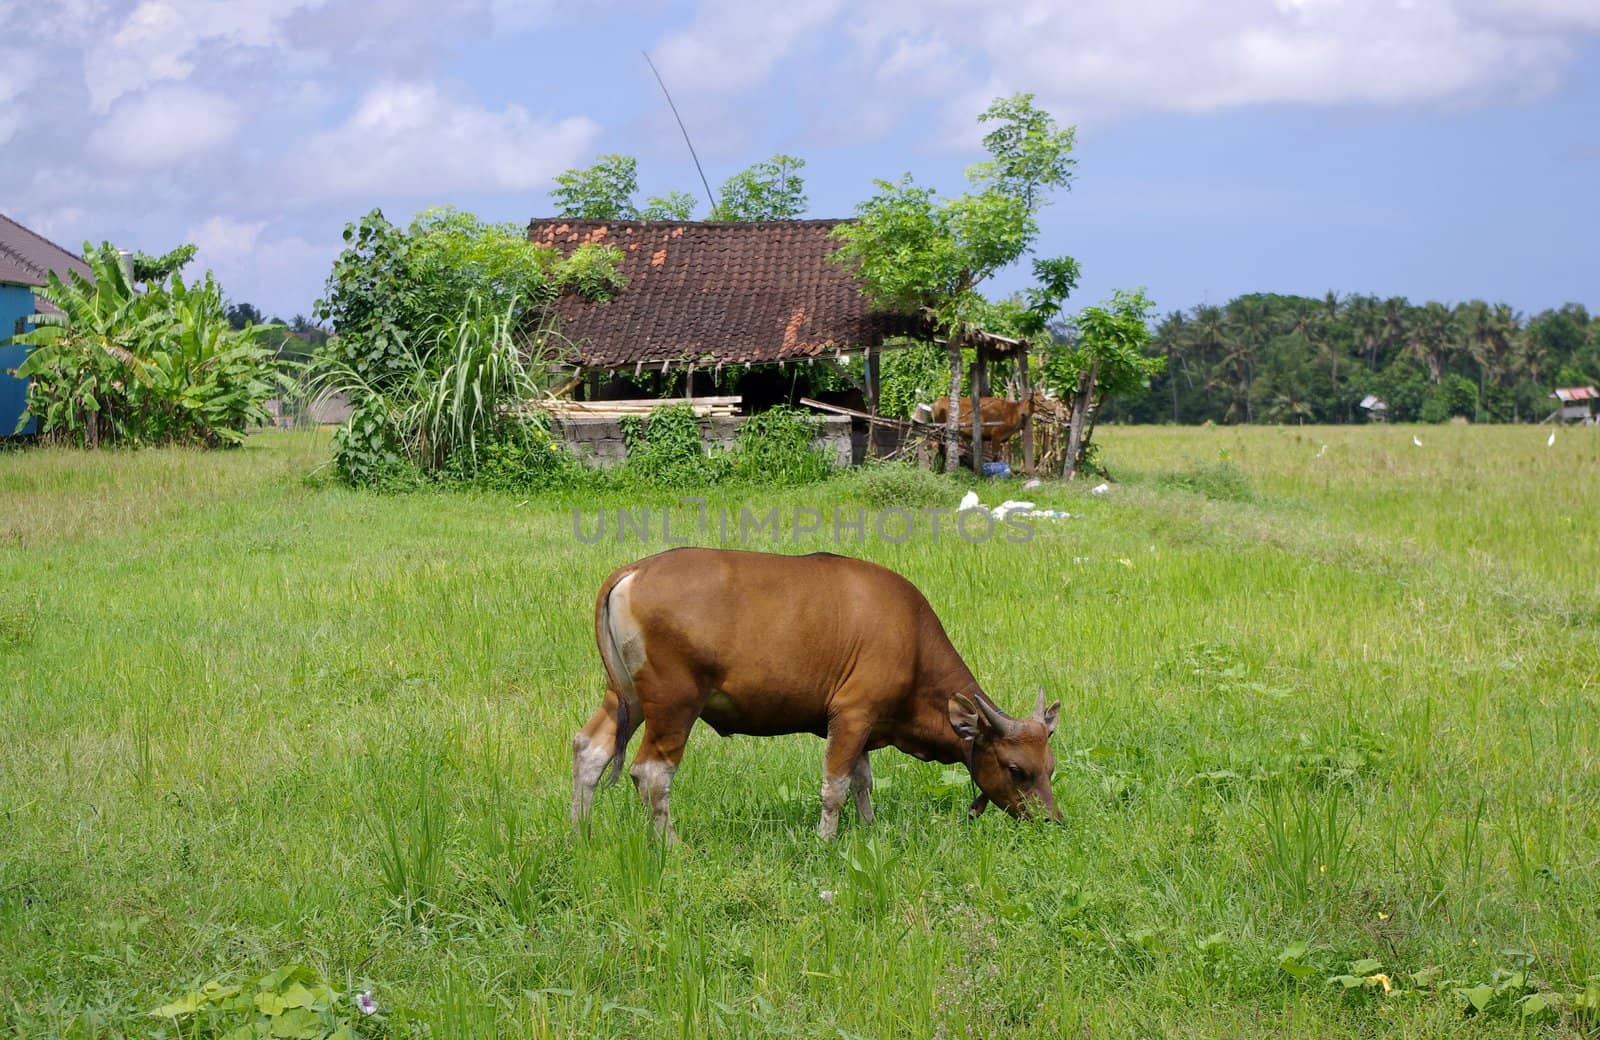 Cow grazing in a meadow, Kerobokan, Bali, Indonesia.